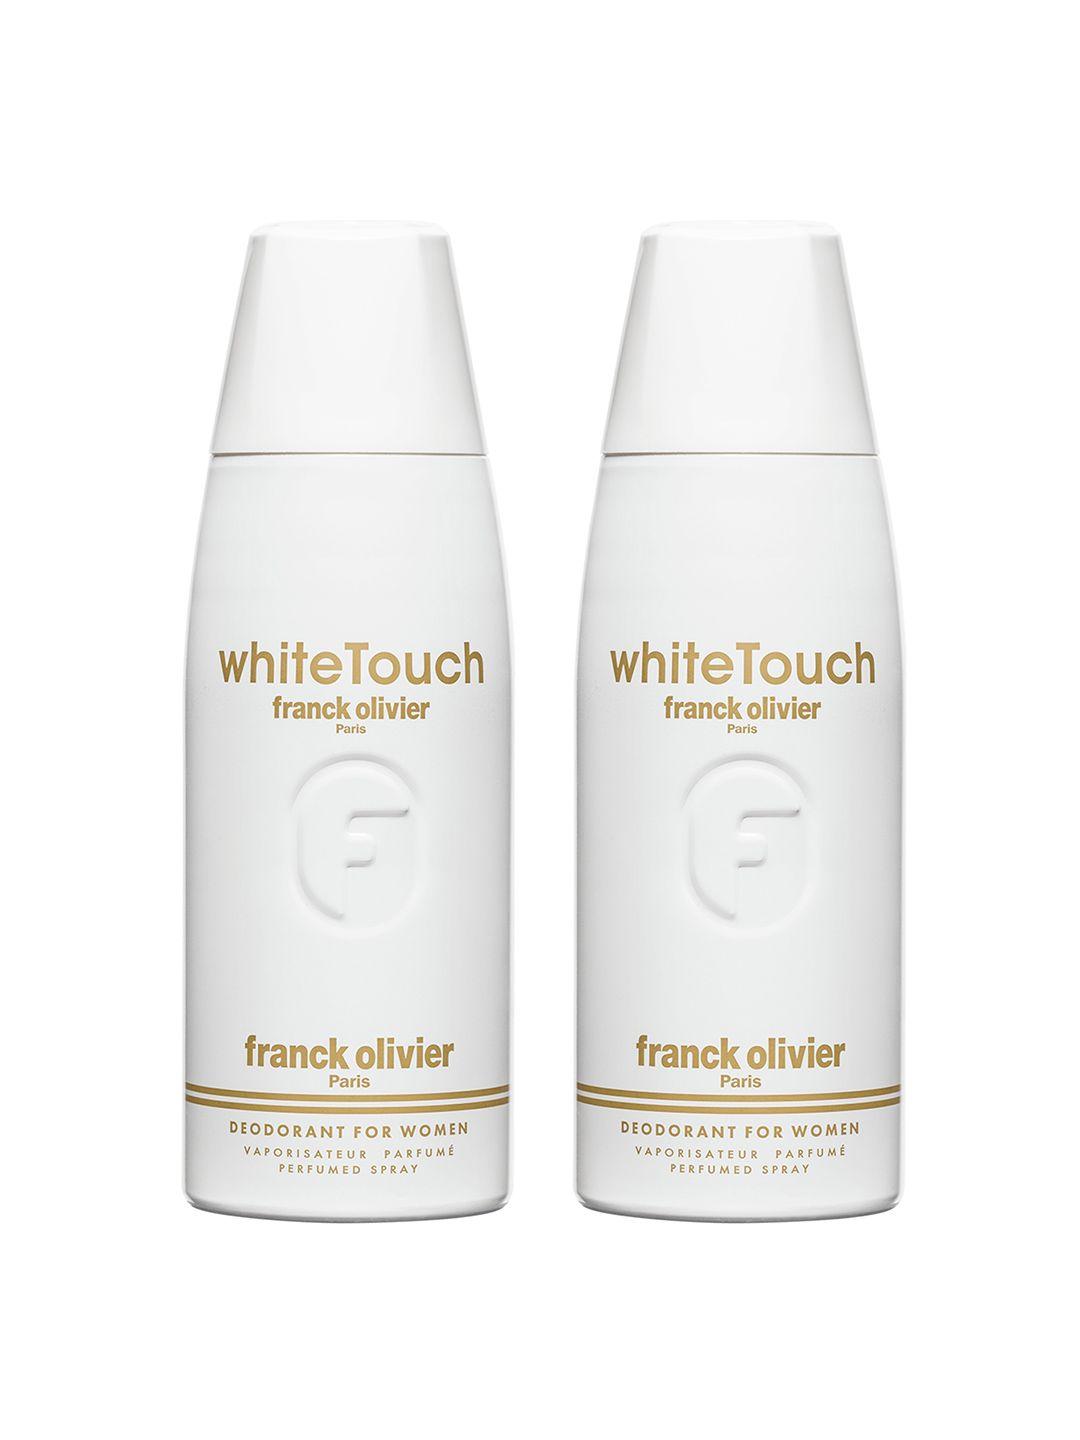 franck olivier women set of 2 whitetouch odour control deodorant spray - 250 ml each